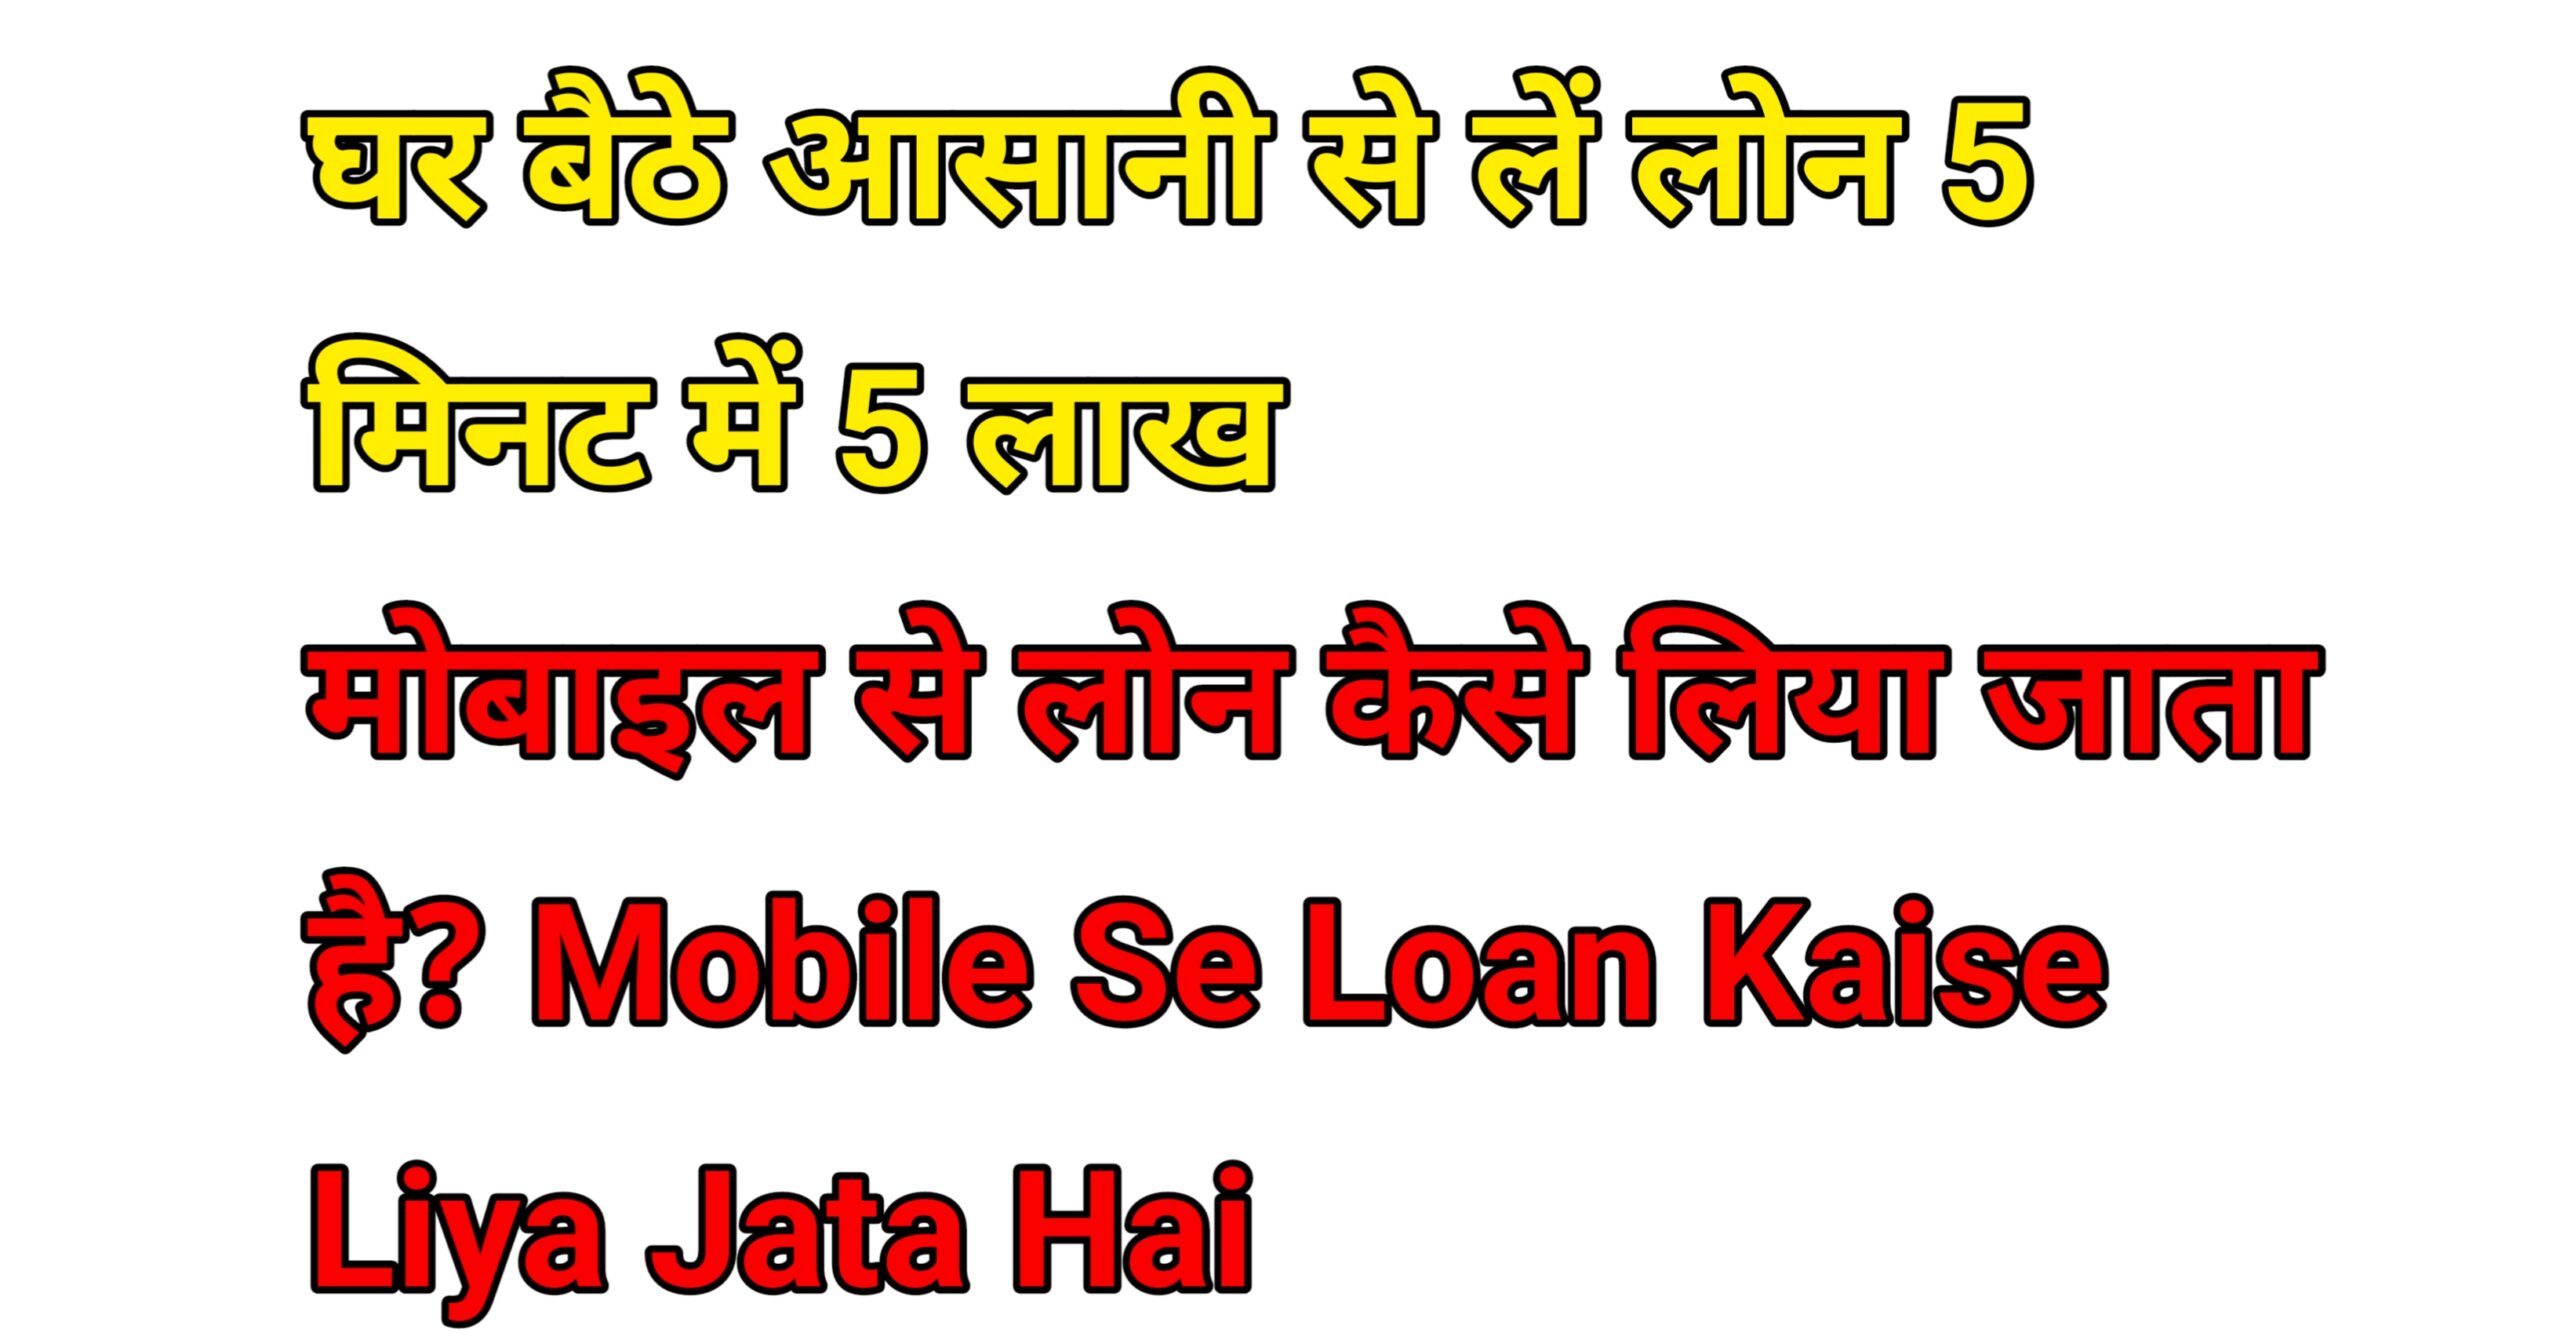 Mobile Se Loan Kaise Liya Jata Hai